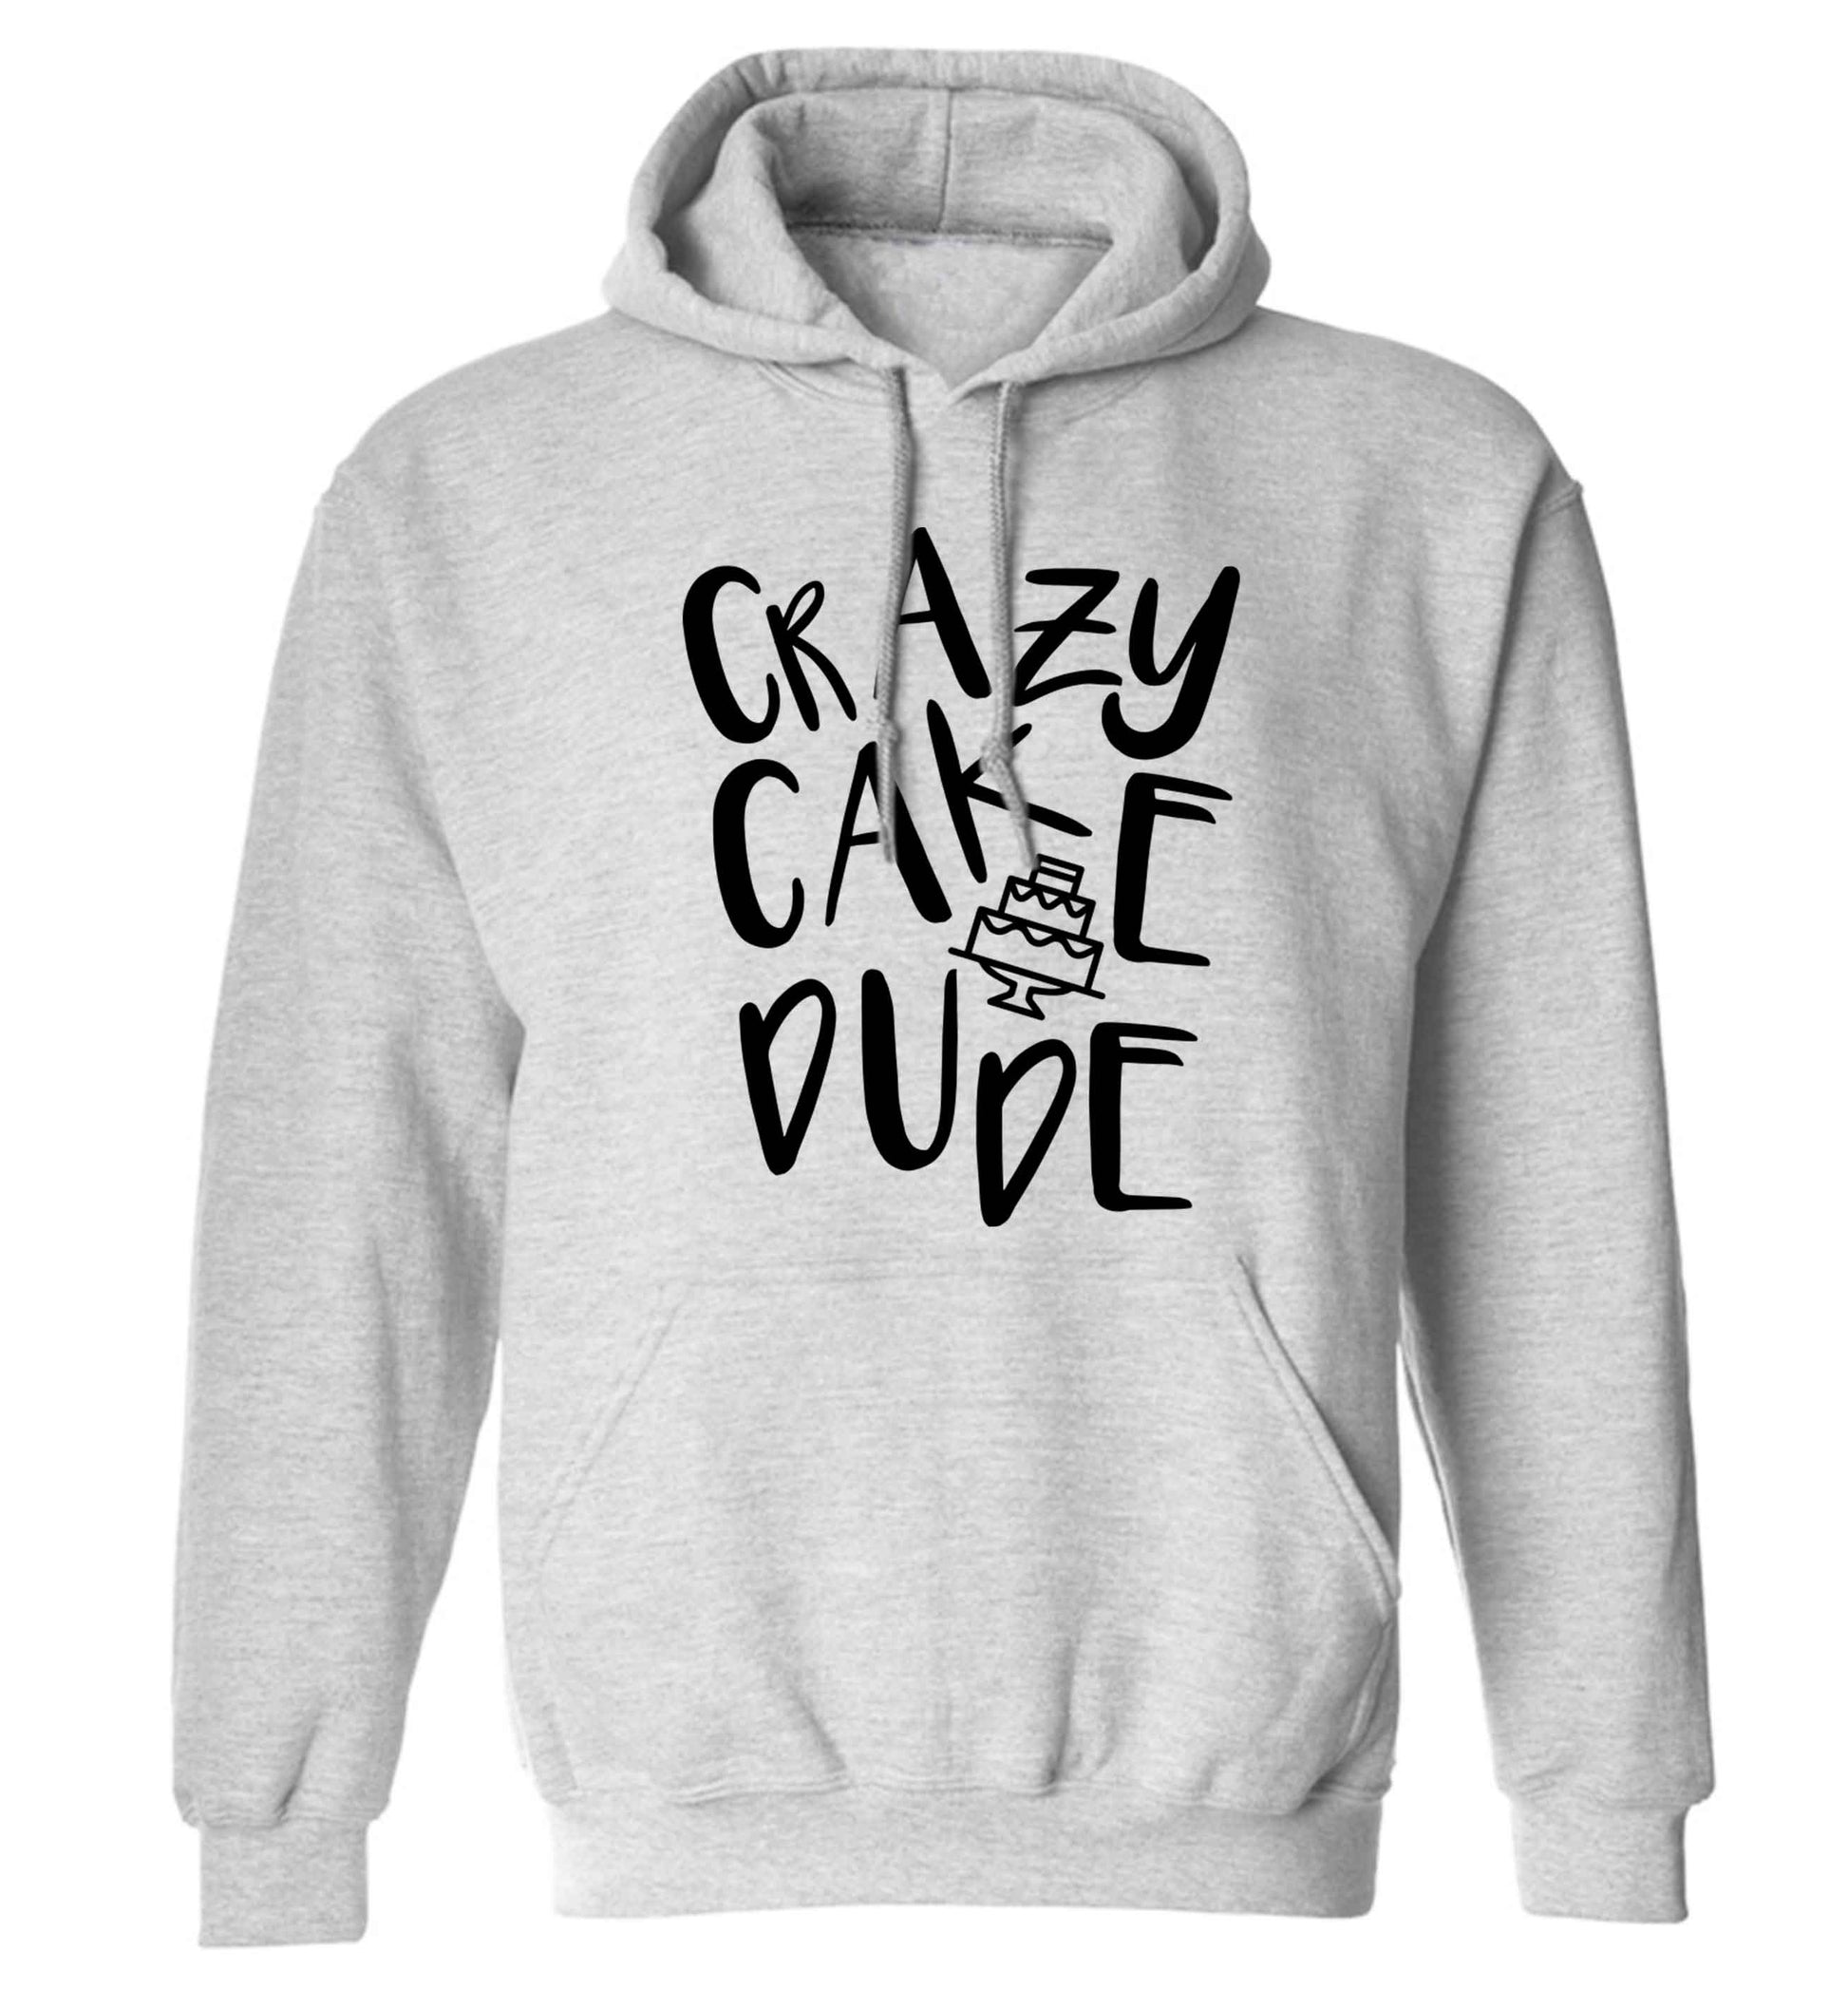 Crazy cake dude adults unisex grey hoodie 2XL